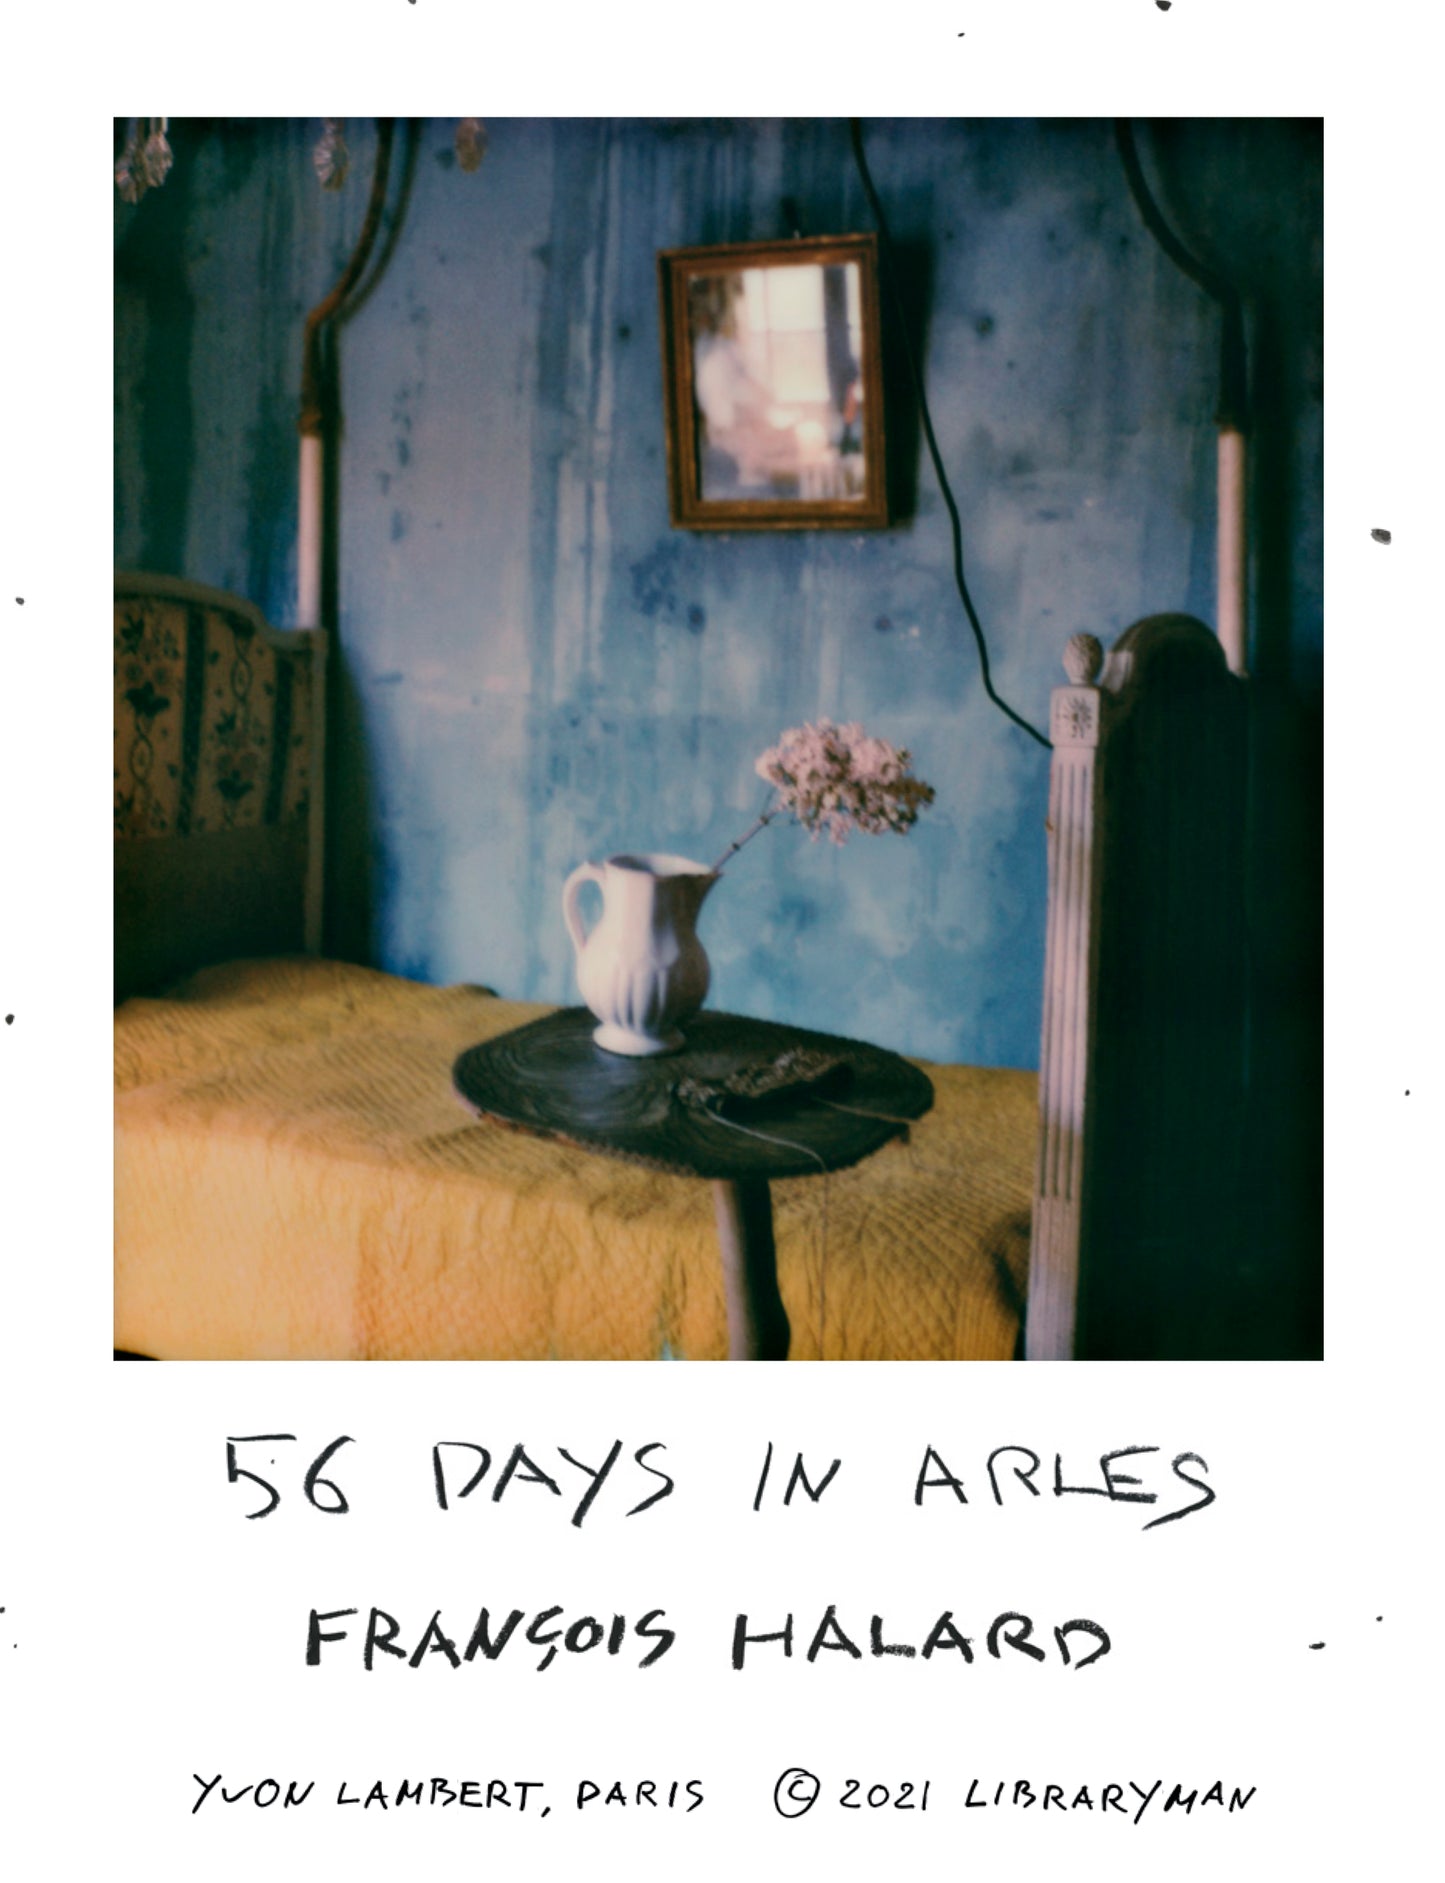 François Halard - 56 Days in Arles (Poster)